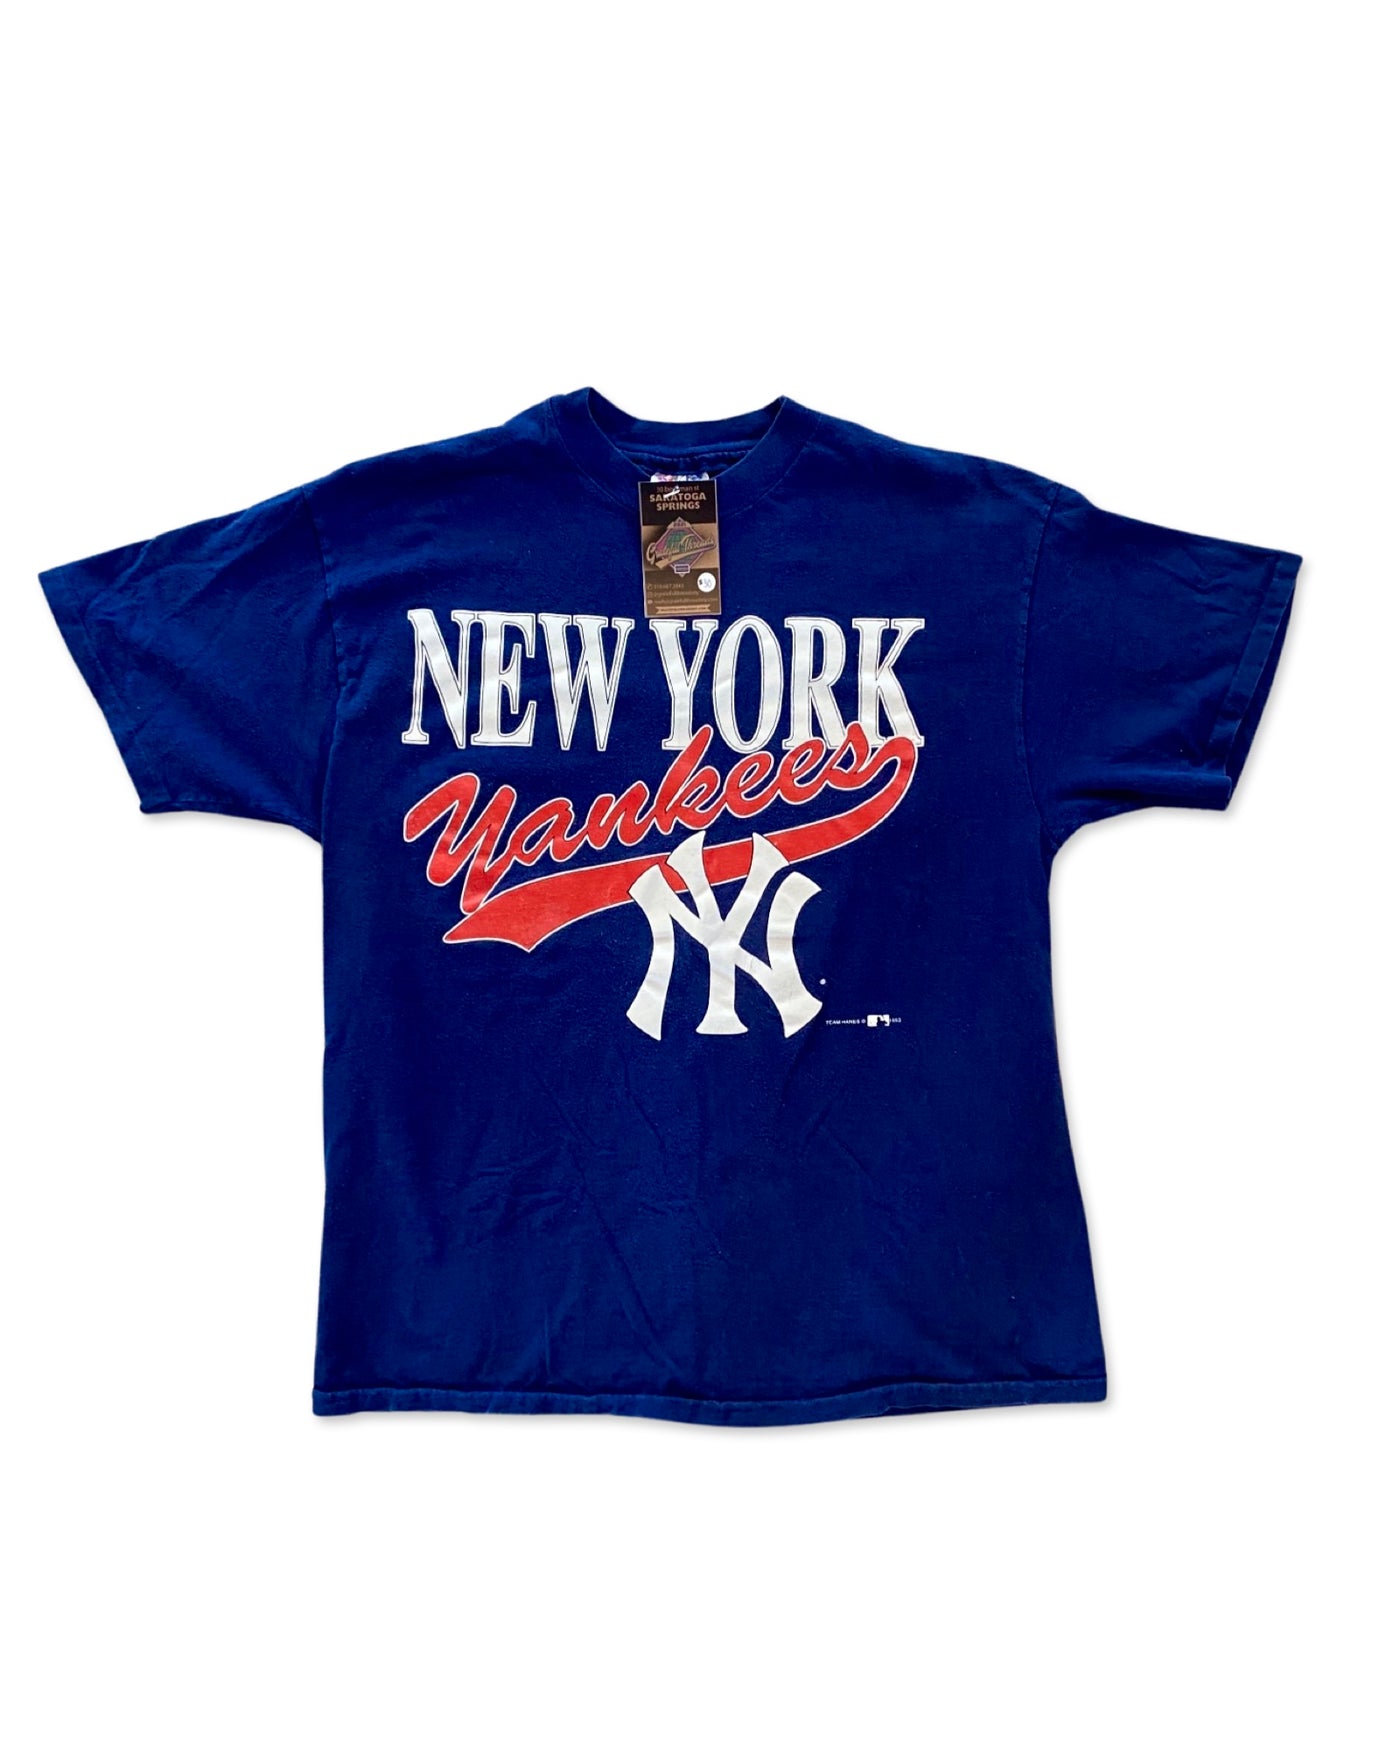 Vintage 1994 New York Yankees T-Shirt